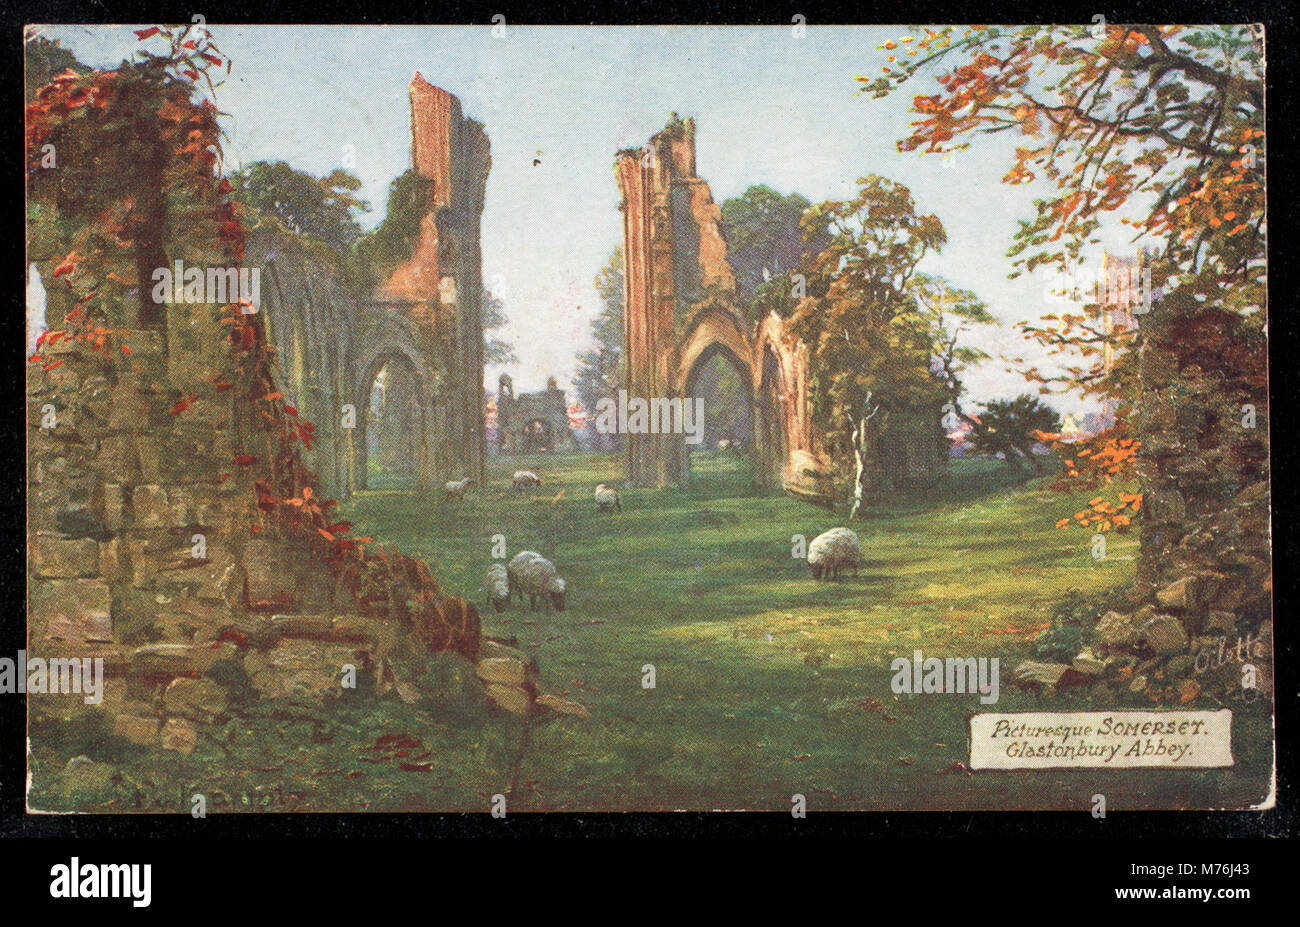 Picturesqe Somersest. Glastonbury Abbey. (NBY 440898) Stock Photo